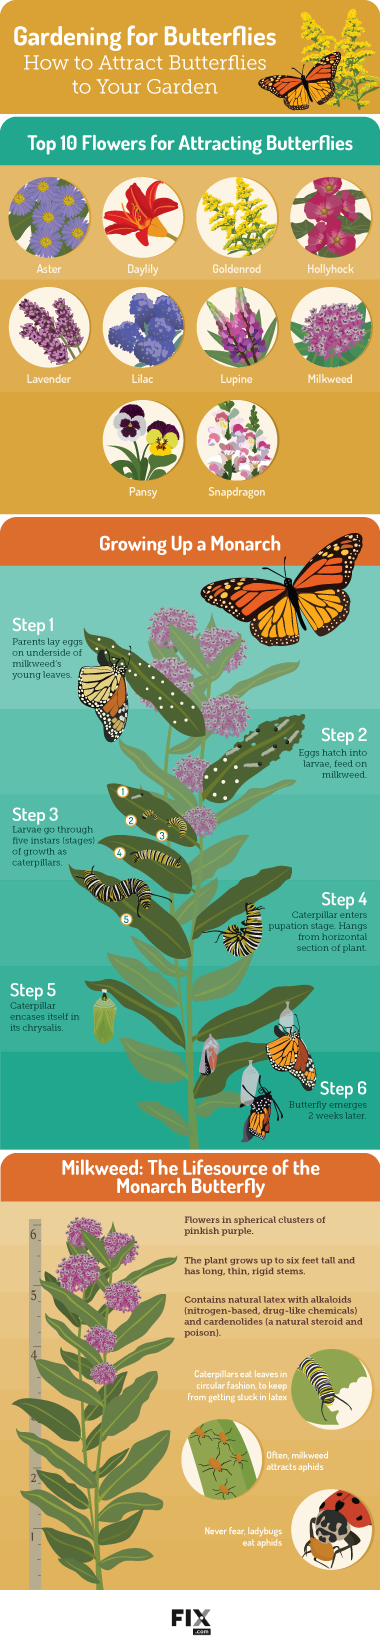 Gardening for butterflies infographic